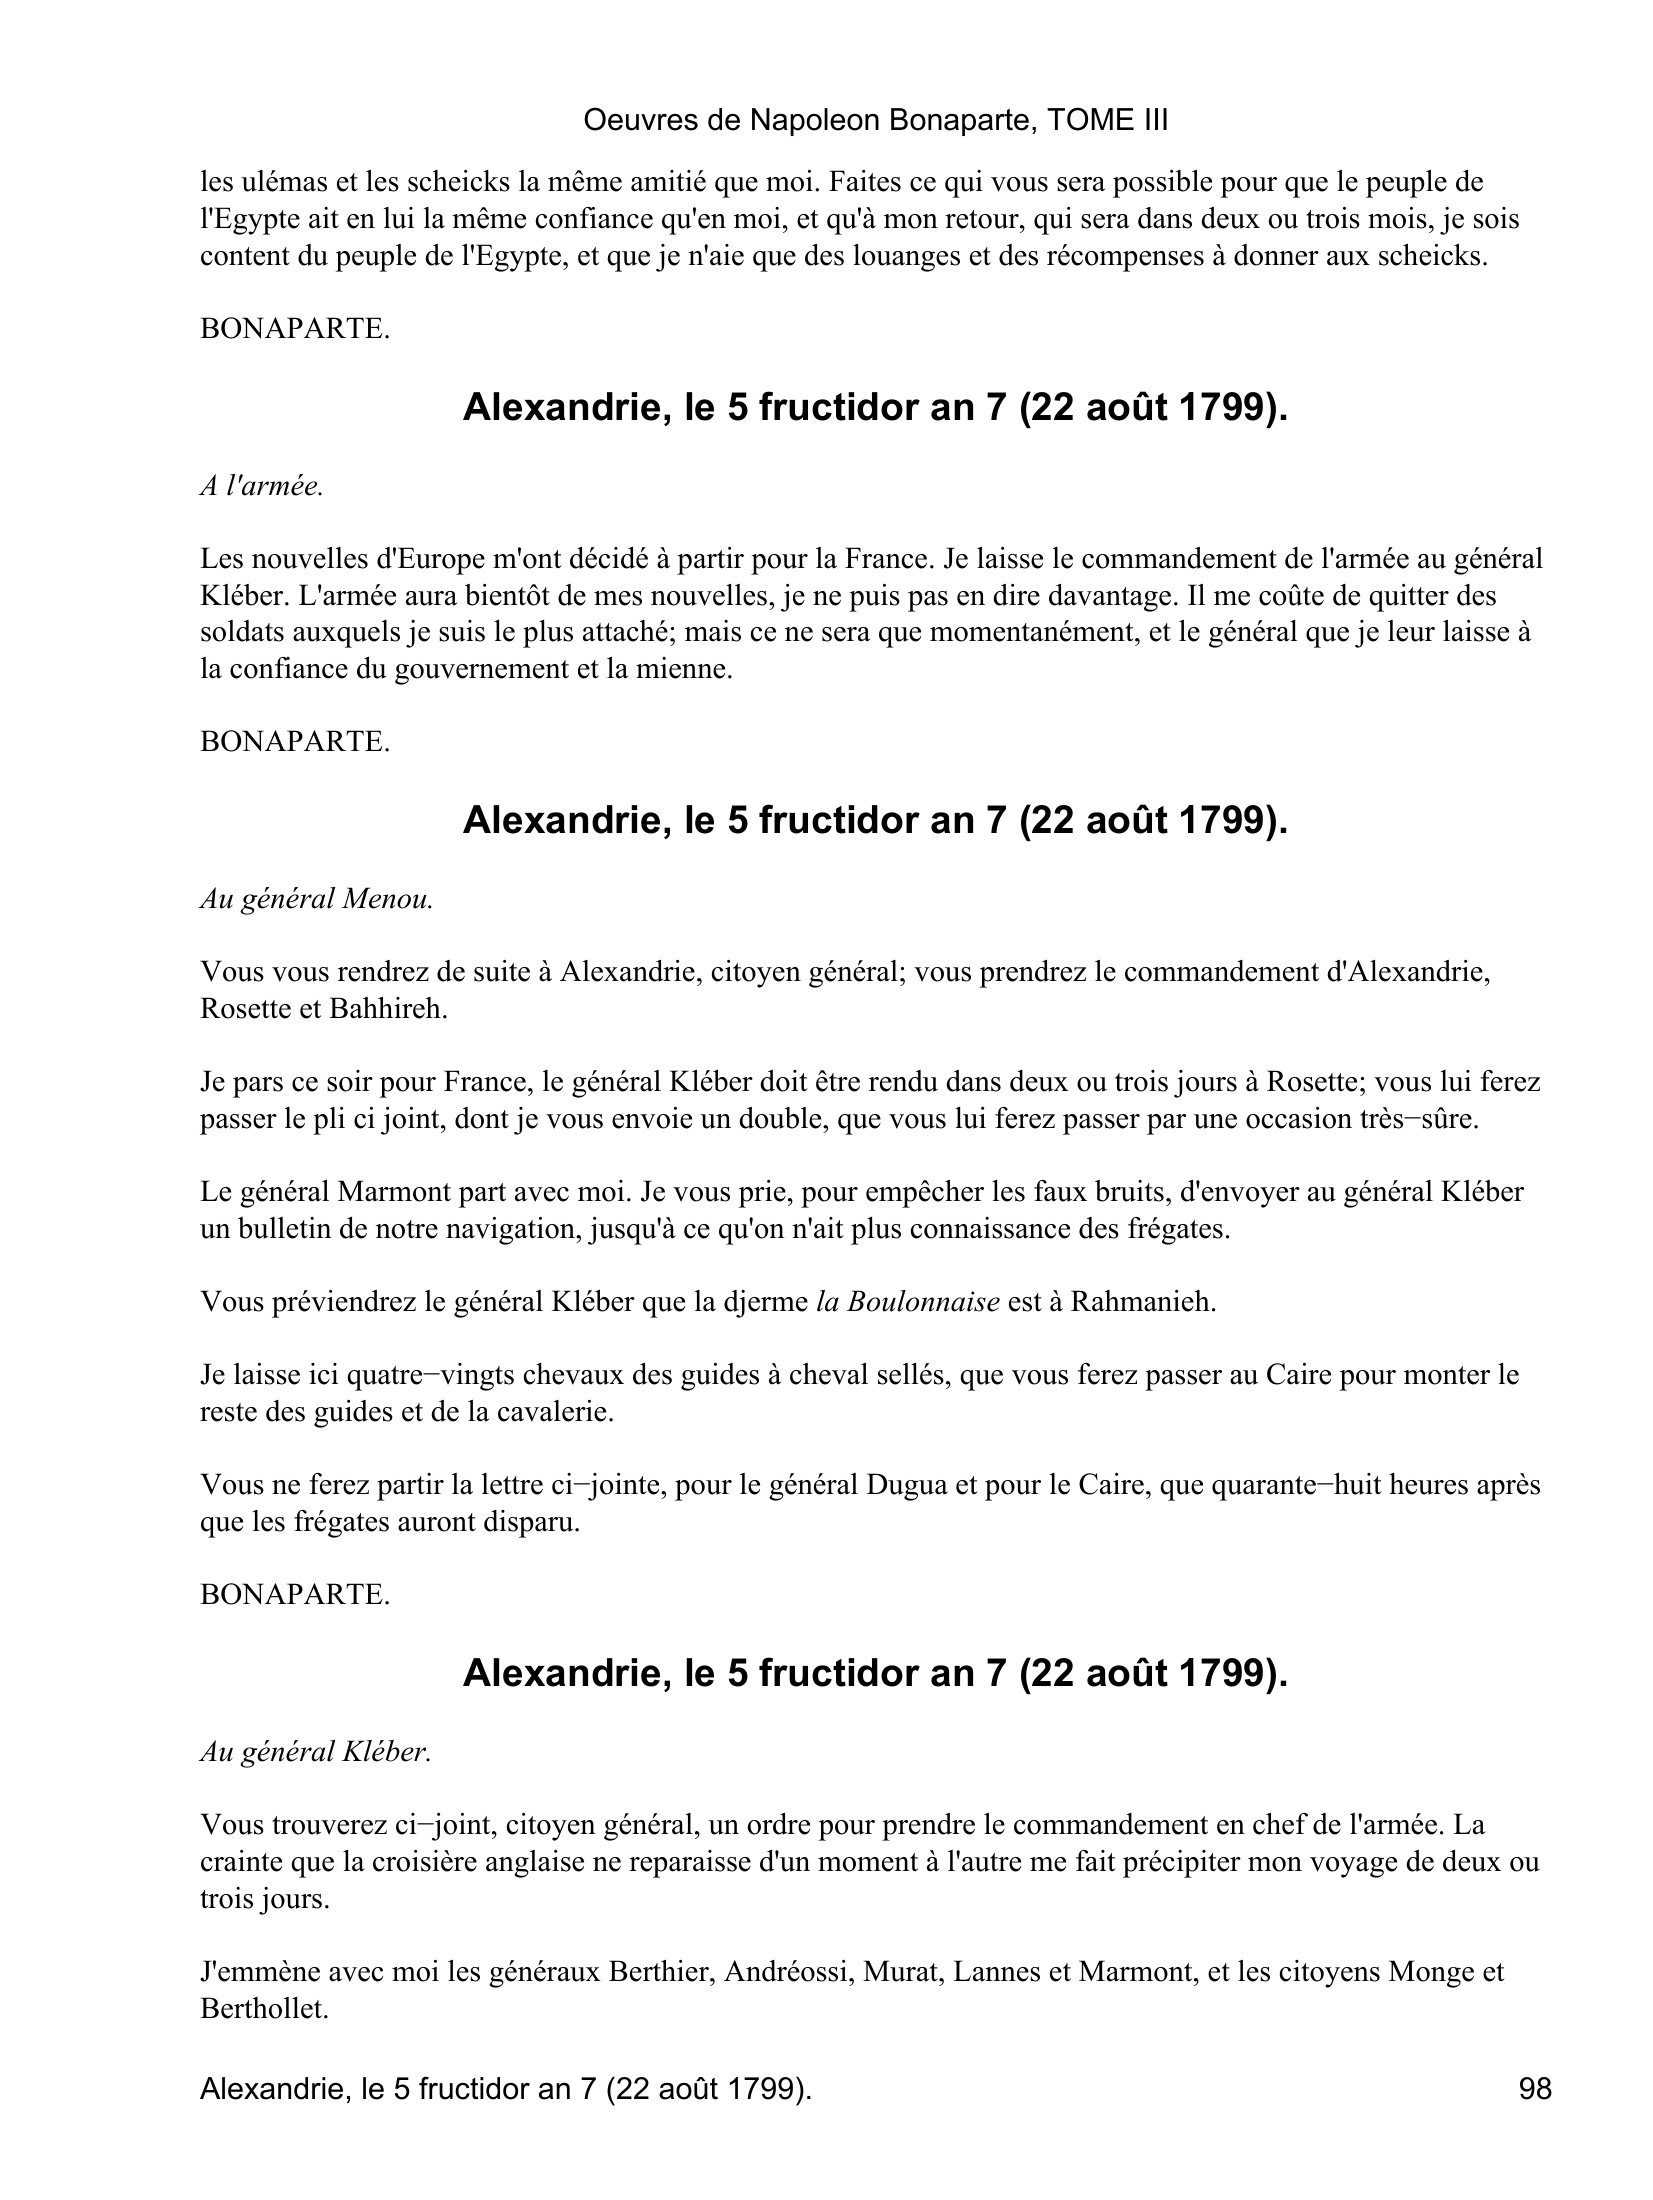 Prévisualisation du document Oeuvres de Napoleon Bonaparte, TOME III

Menouf, le 2 fructidor an 7 (19 août 1799).